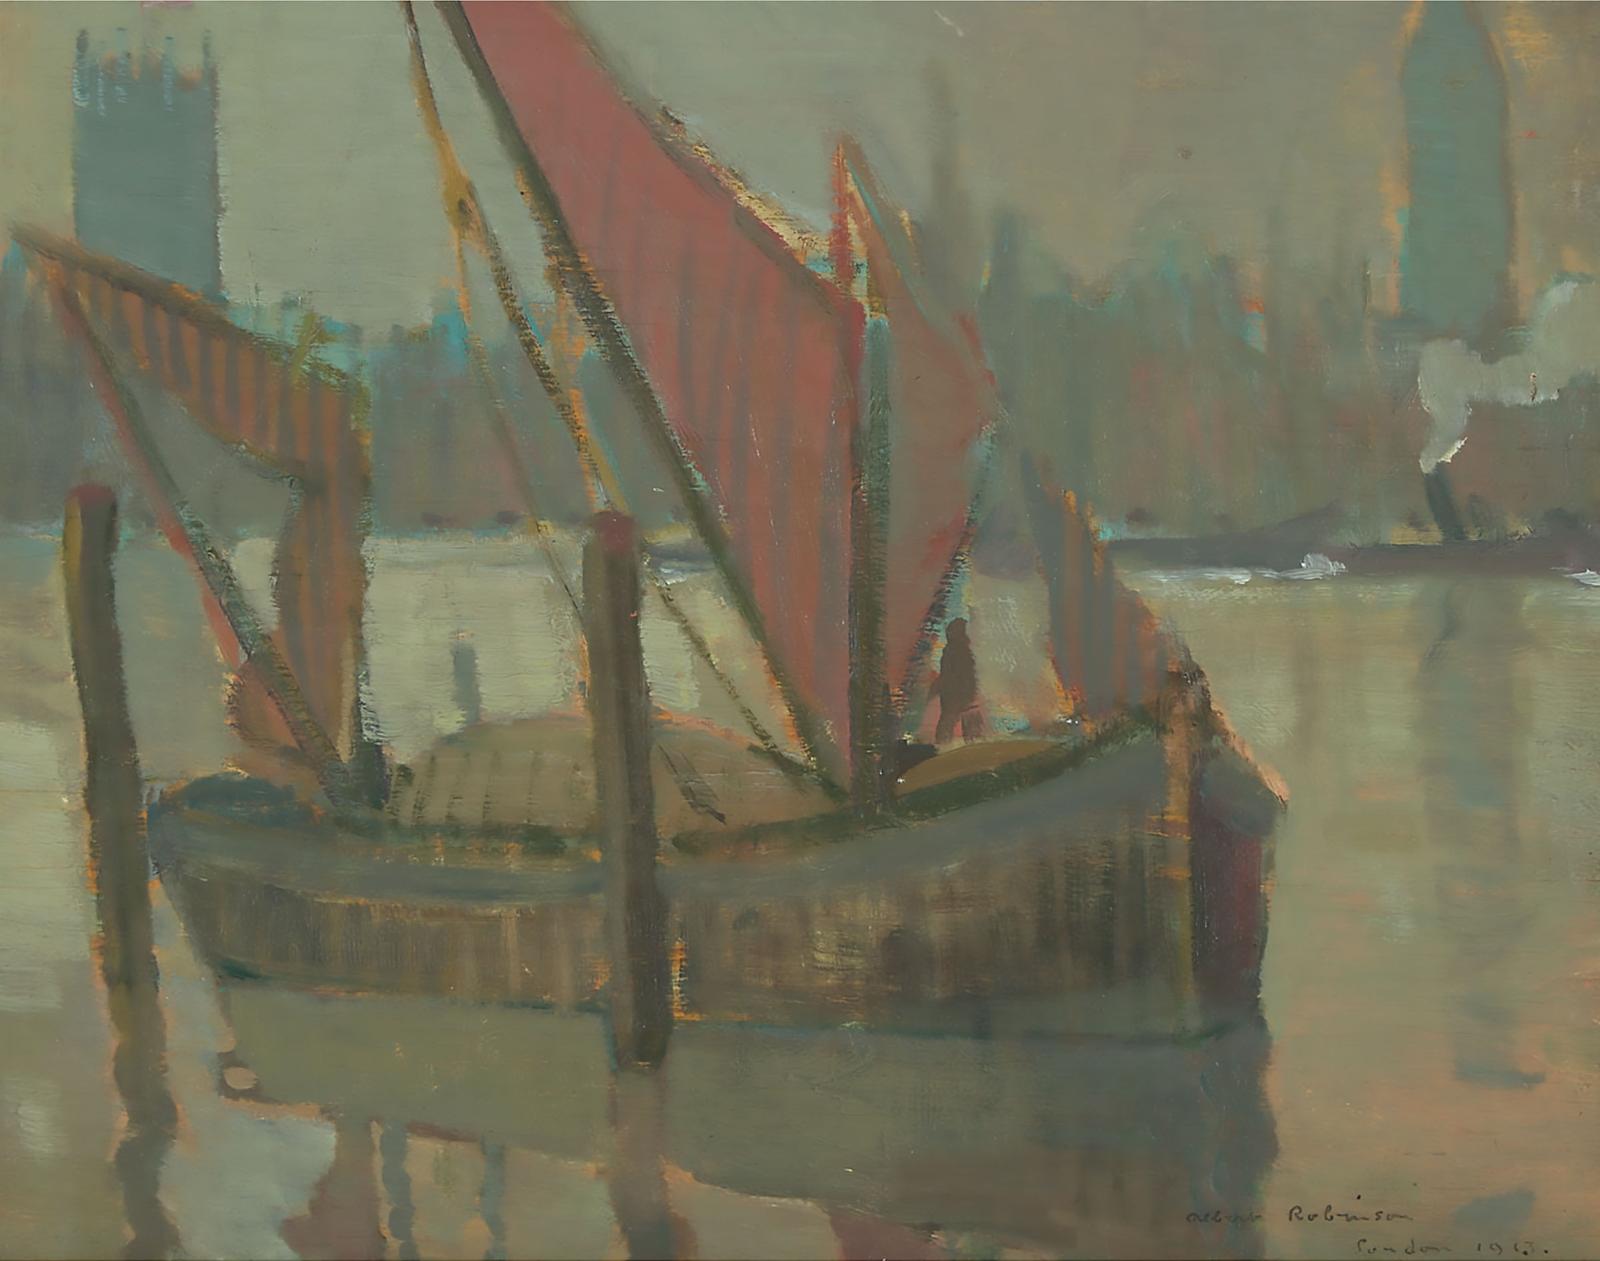 Albert Henry Robinson (1881-1956) - Fishing Boats, 1913